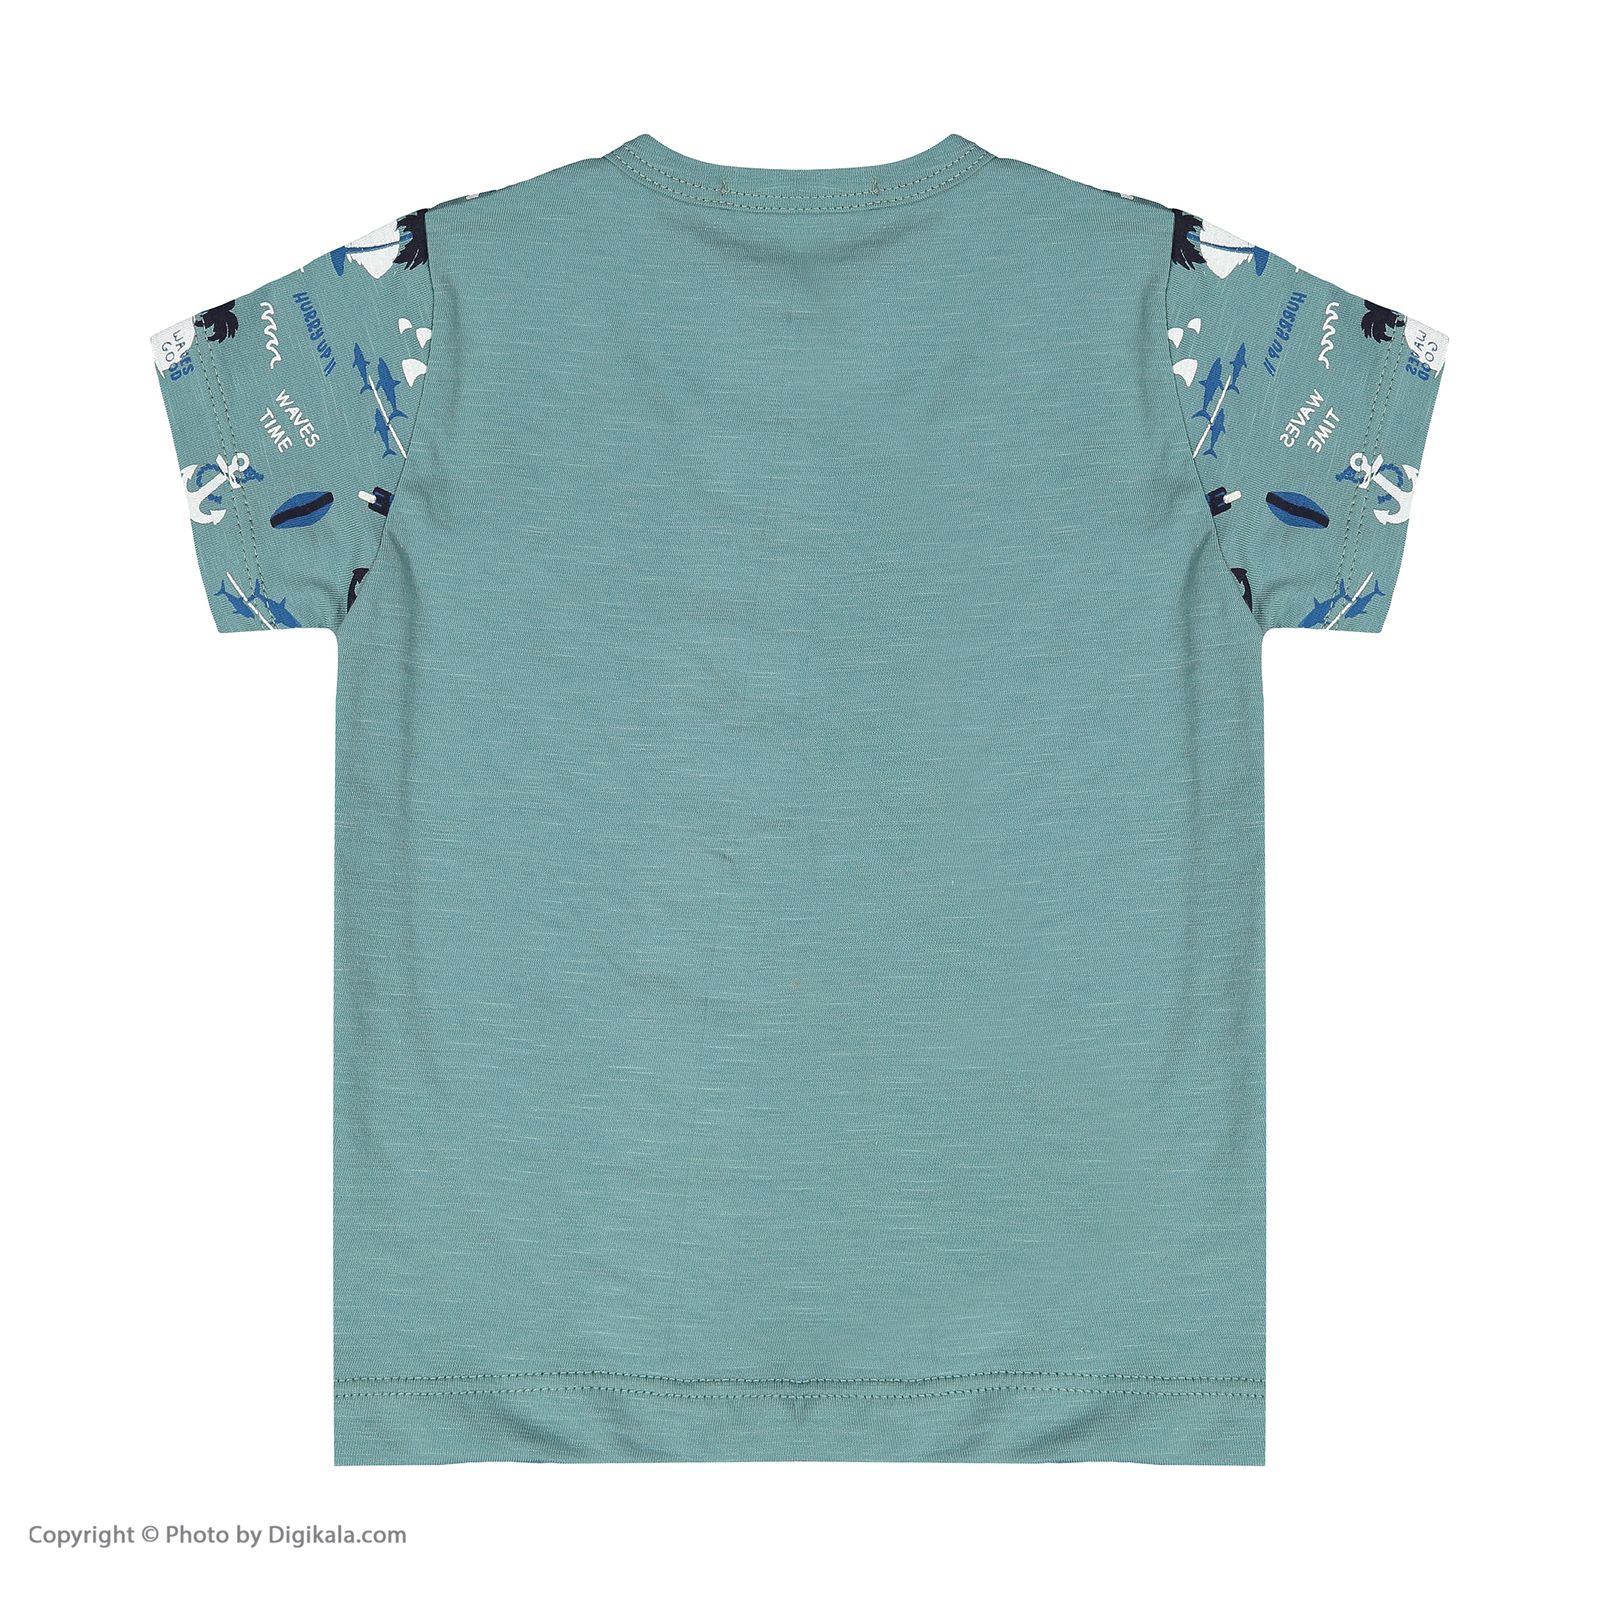 تی شرت پسرانه بی کی مدل 2211285-46 -  - 3